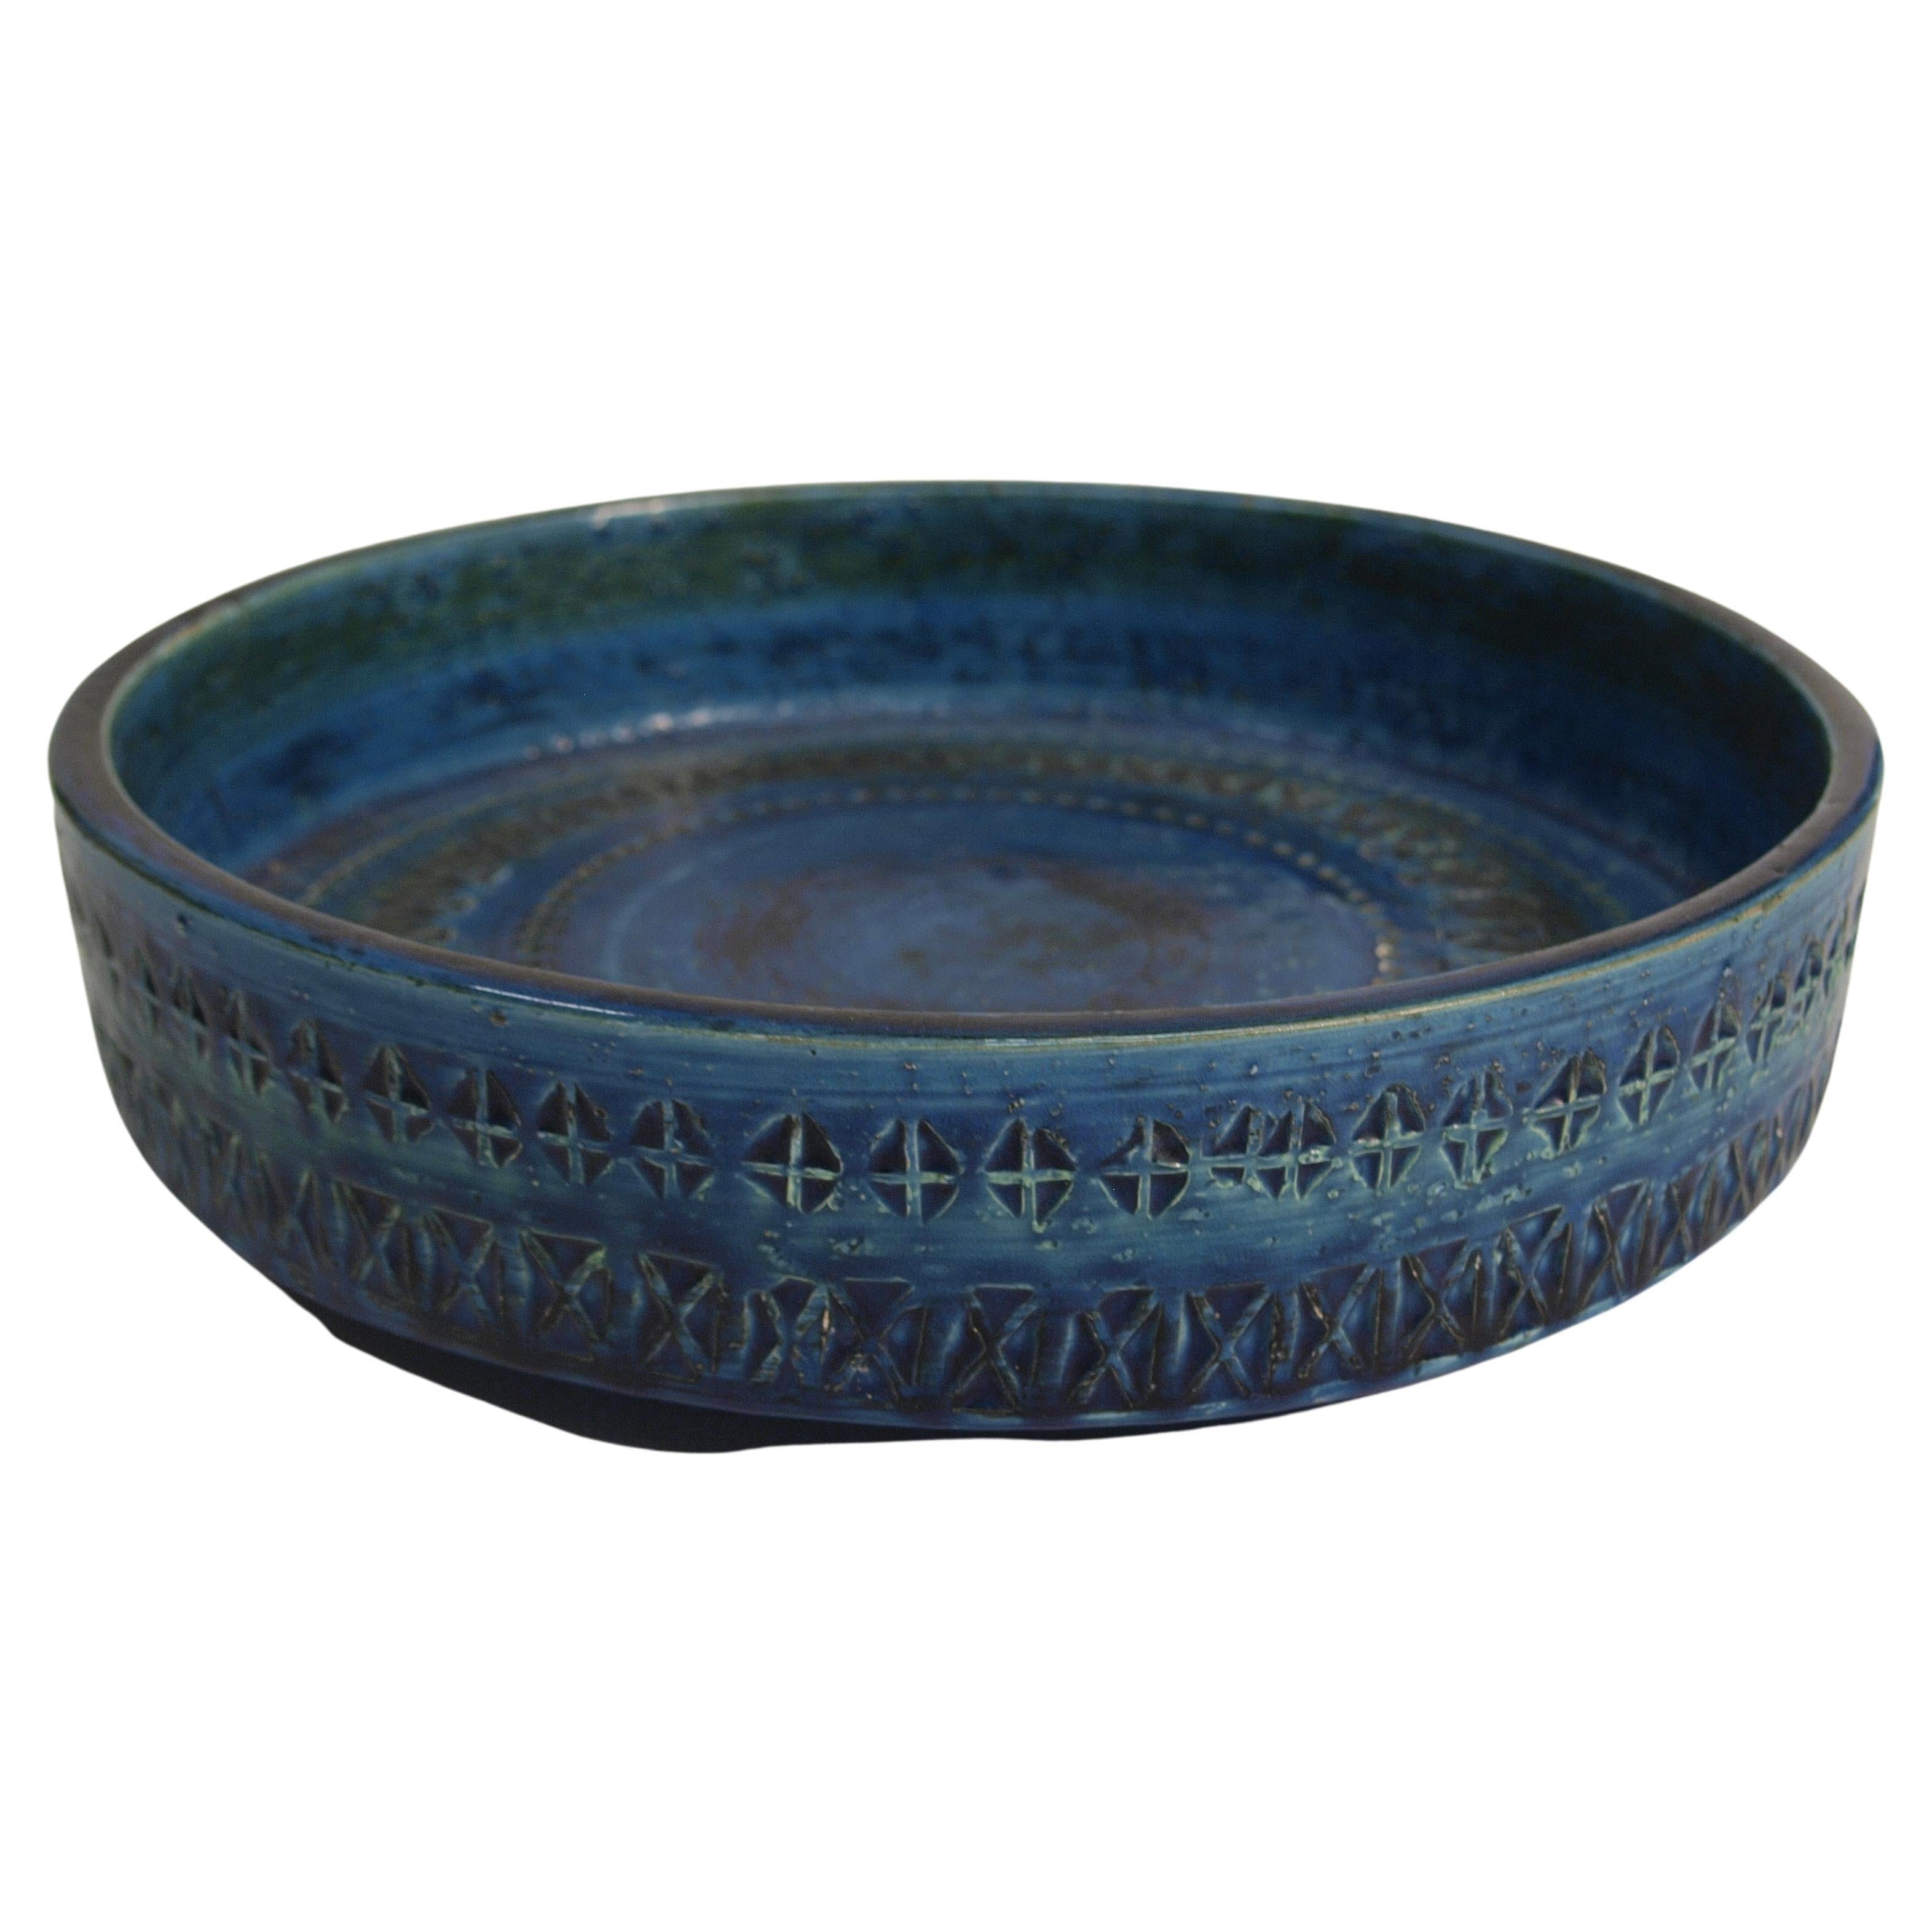 Other Aldo Londi Circular Ceramic Bowl, Blue Glazed, Bitossi, Mid-20th Century For Sale